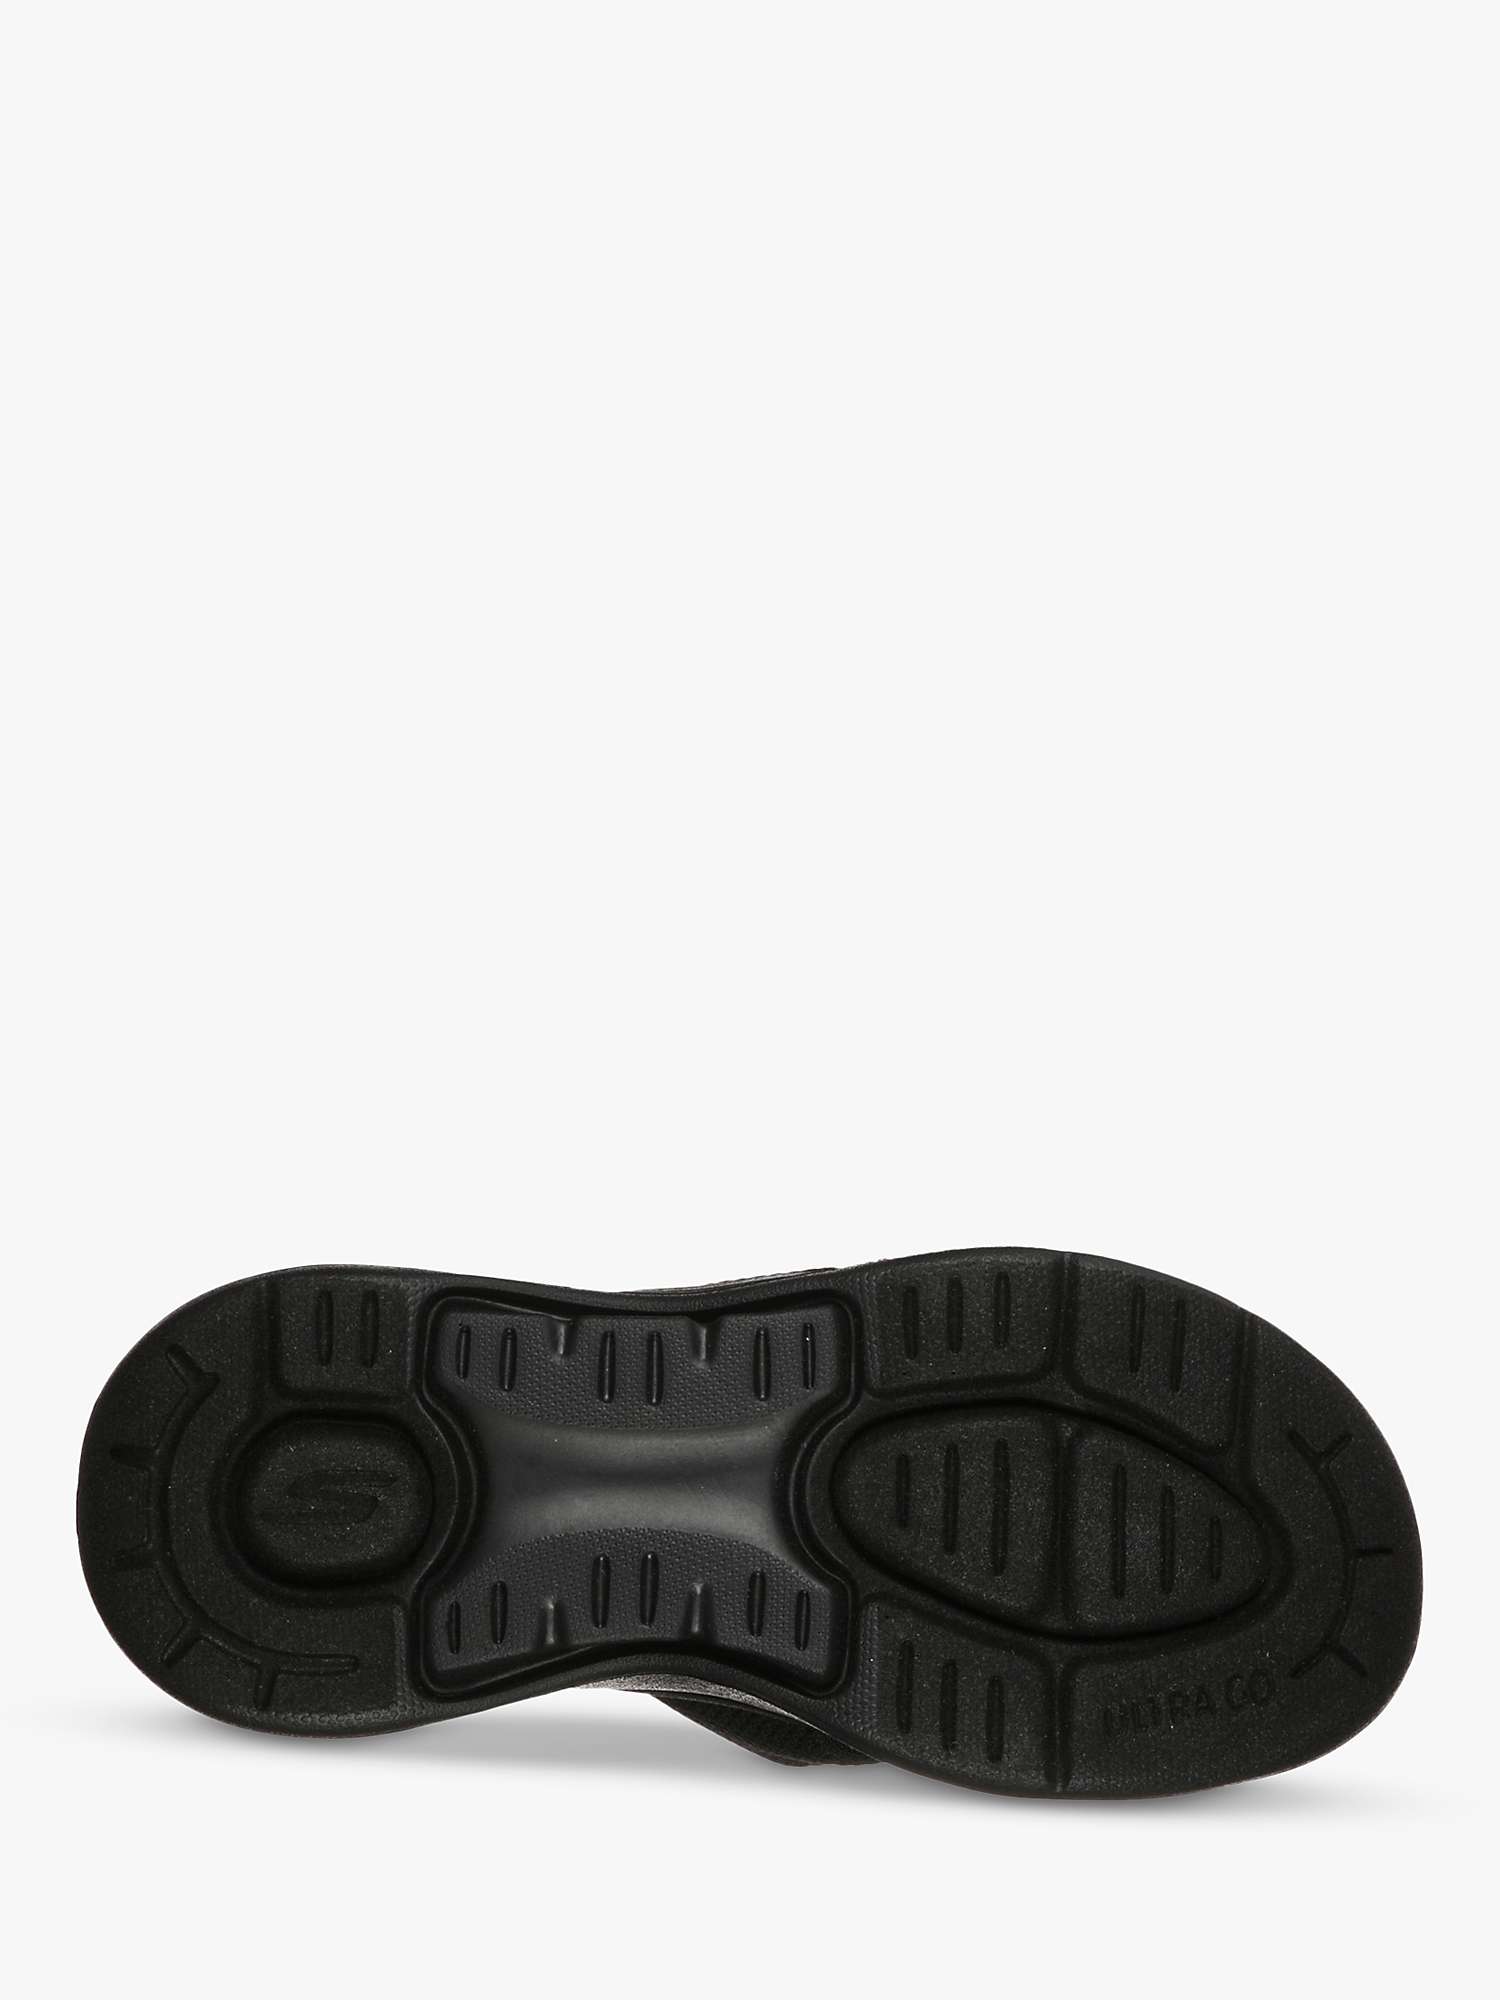 Buy Skechers Go Walk Arch Fit Worthy Summer Sandals Online at johnlewis.com